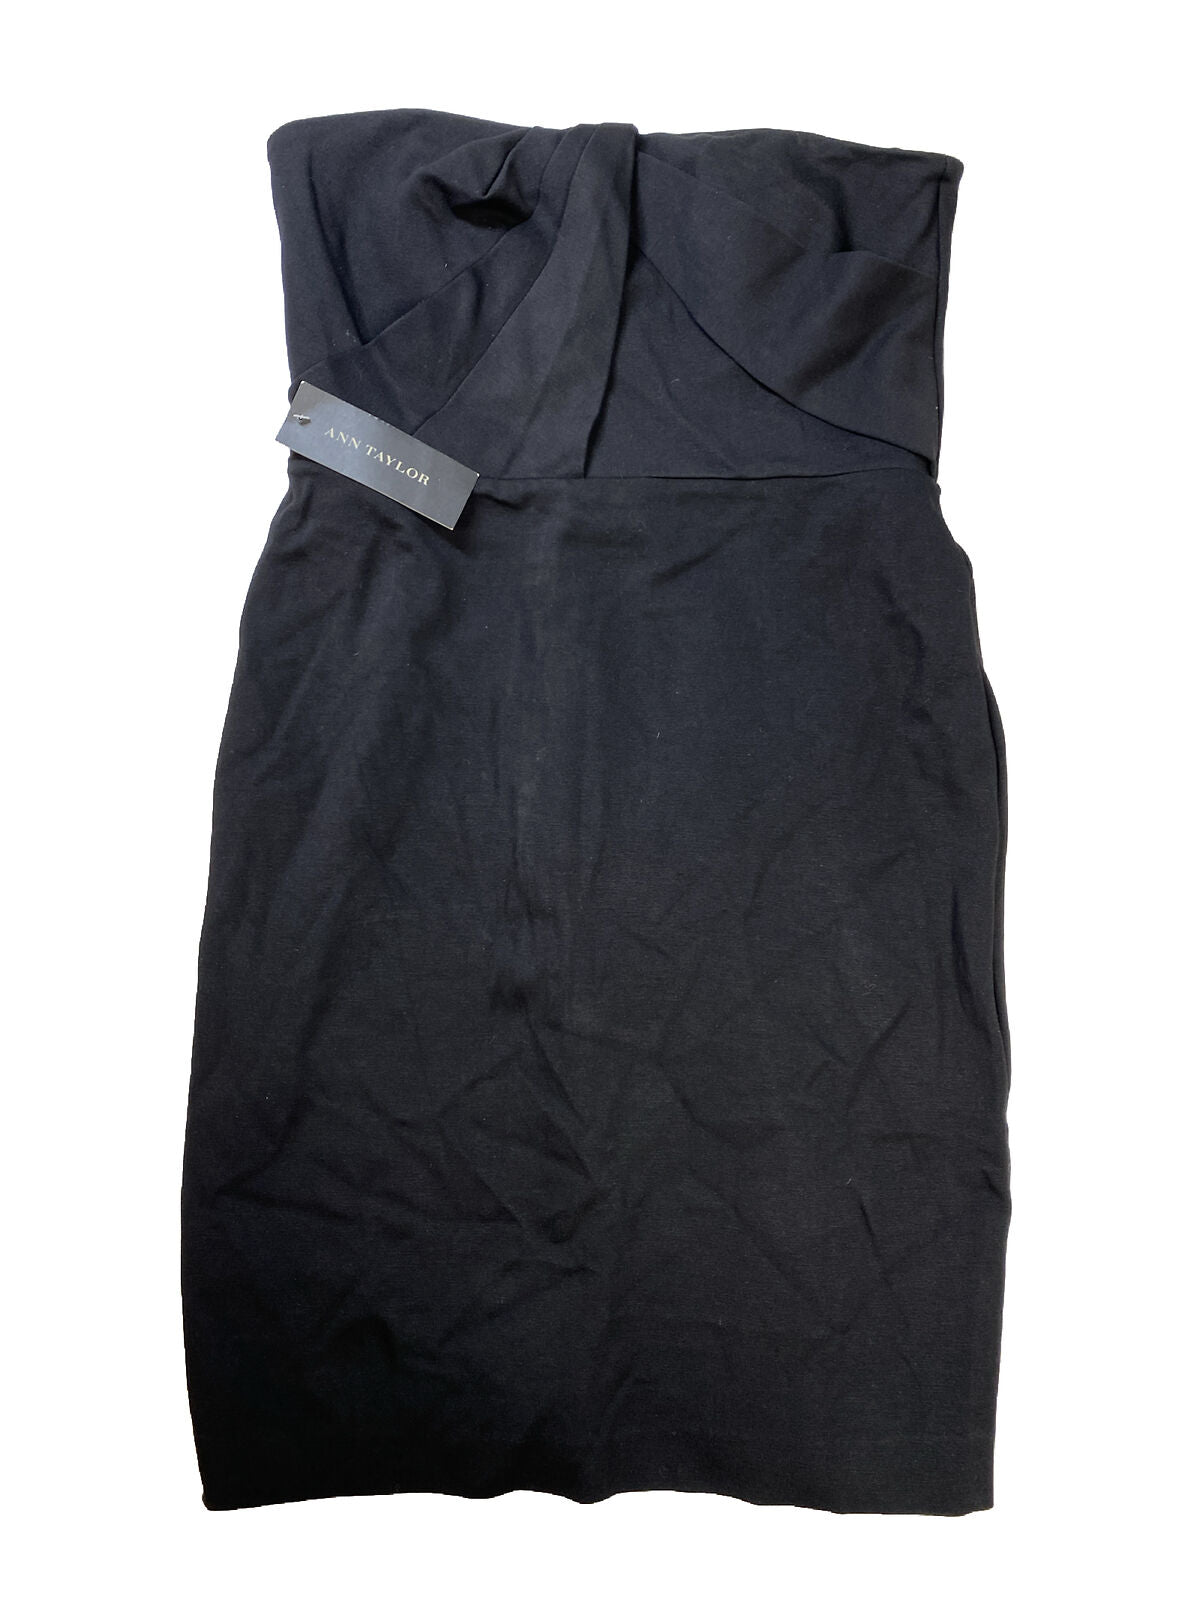 NEW Ann Taylor Women's Black Strapless Cocktail Dress - 8